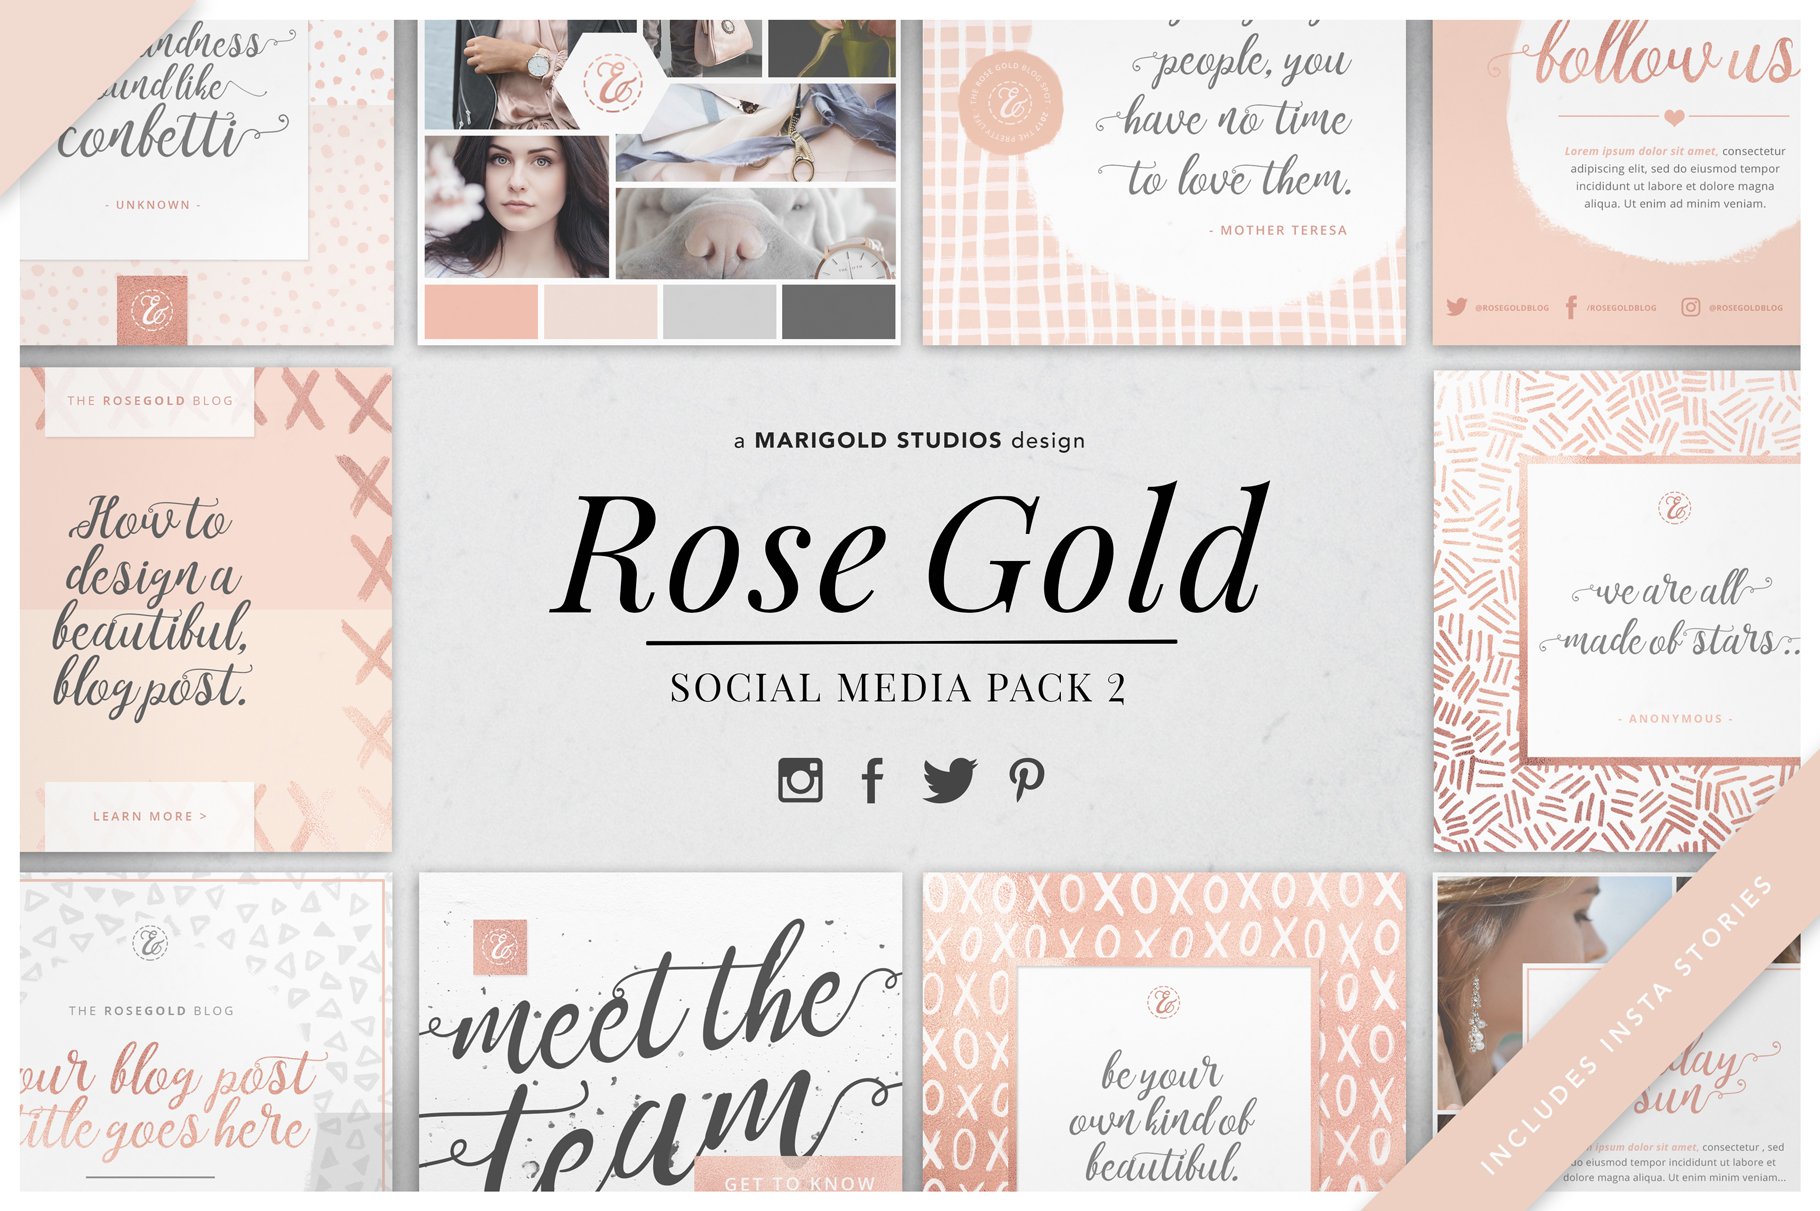 ROSE GOLD | Social Media Pack 2 preview image.